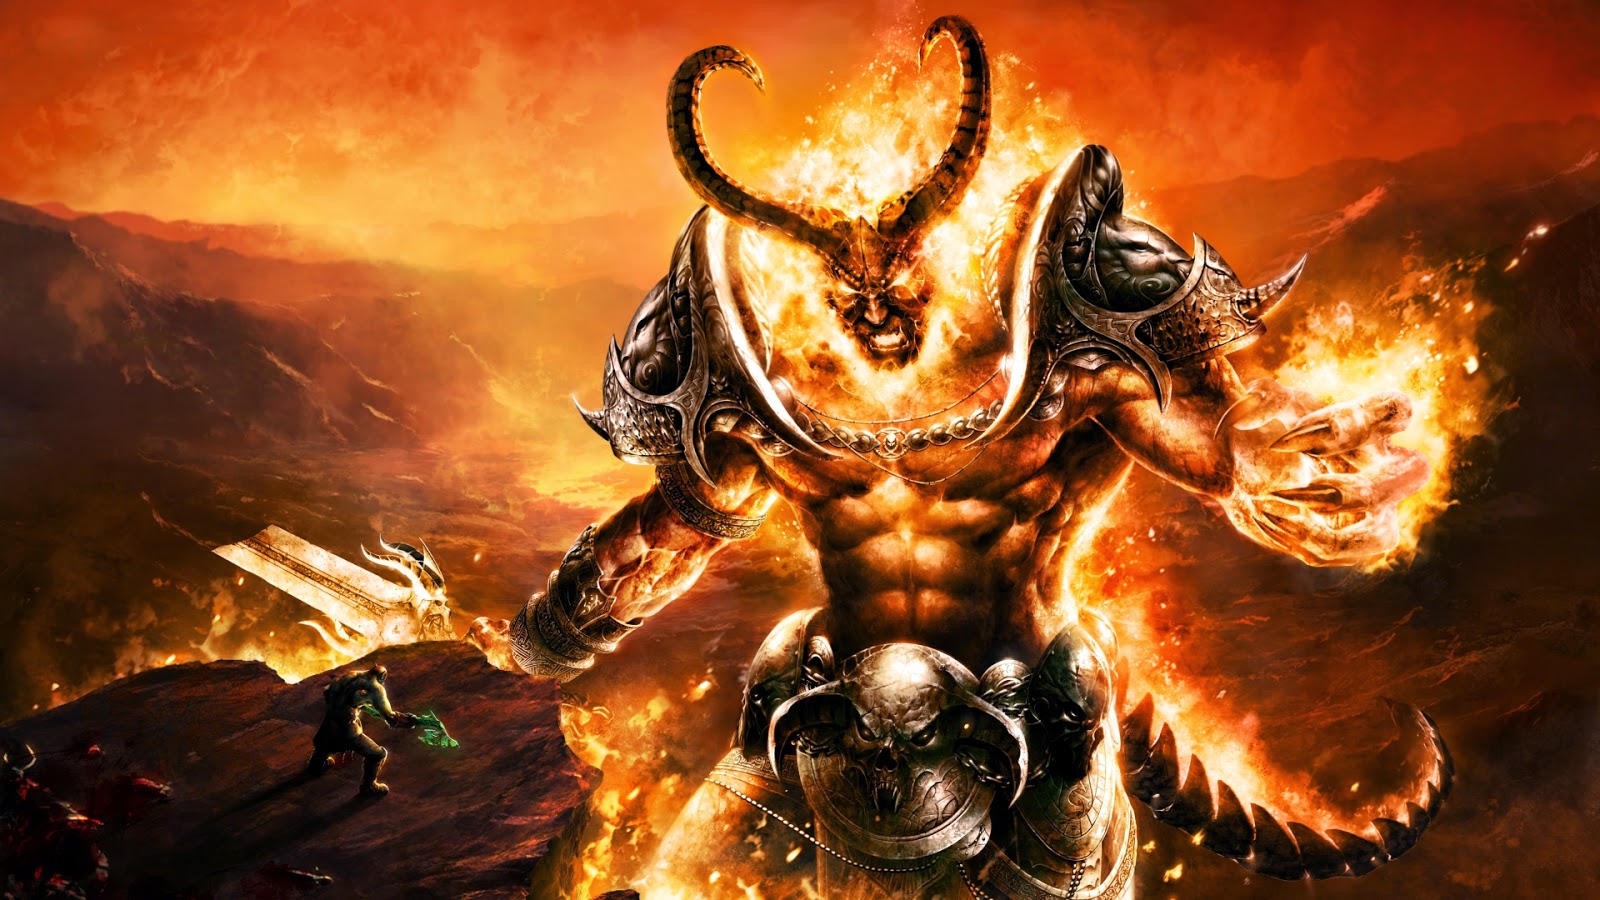 devil live wallpaper,action adventure game,demon,cg artwork,mythology,fictional character